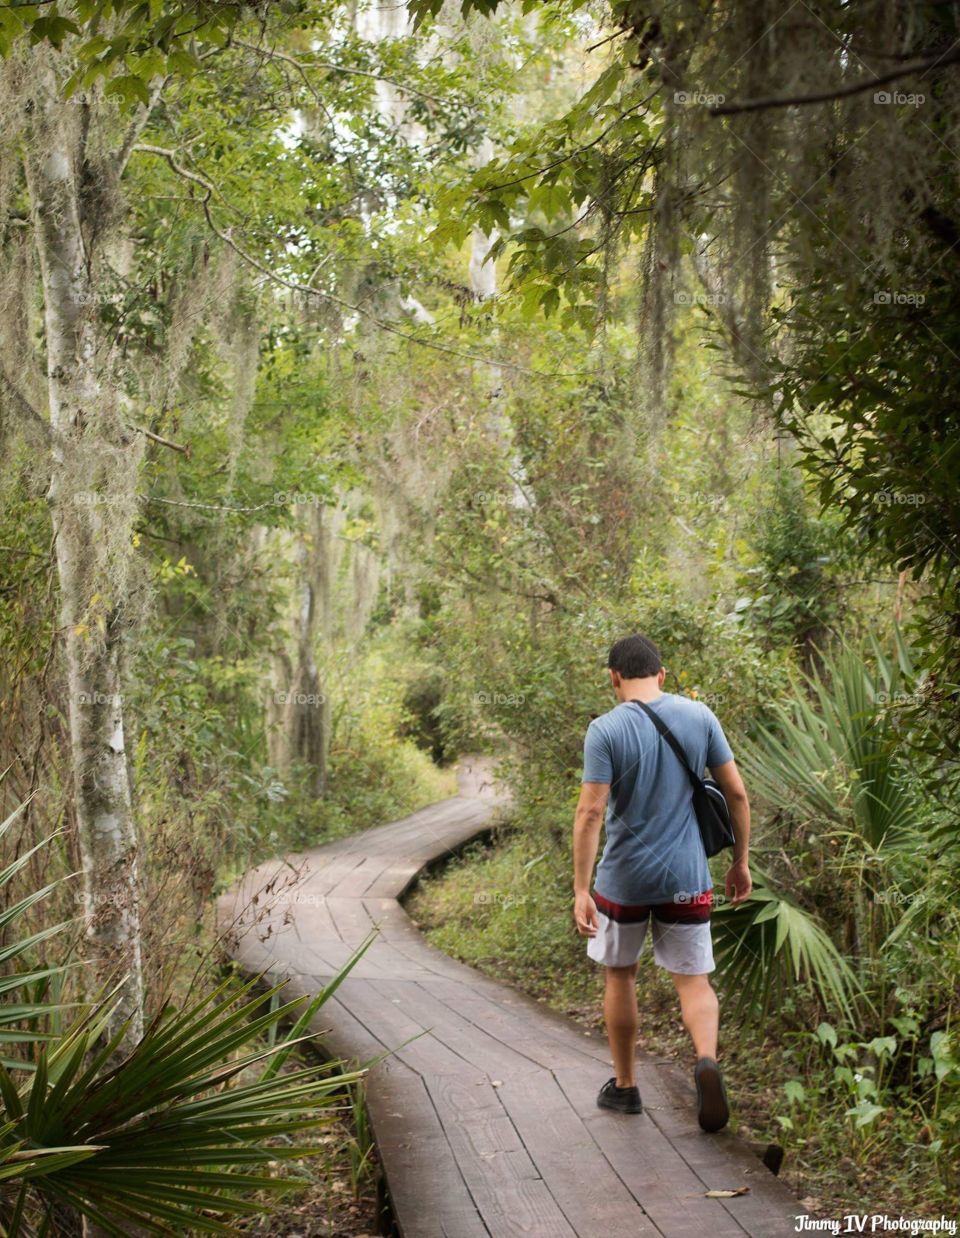 Hiking through the swamp. 